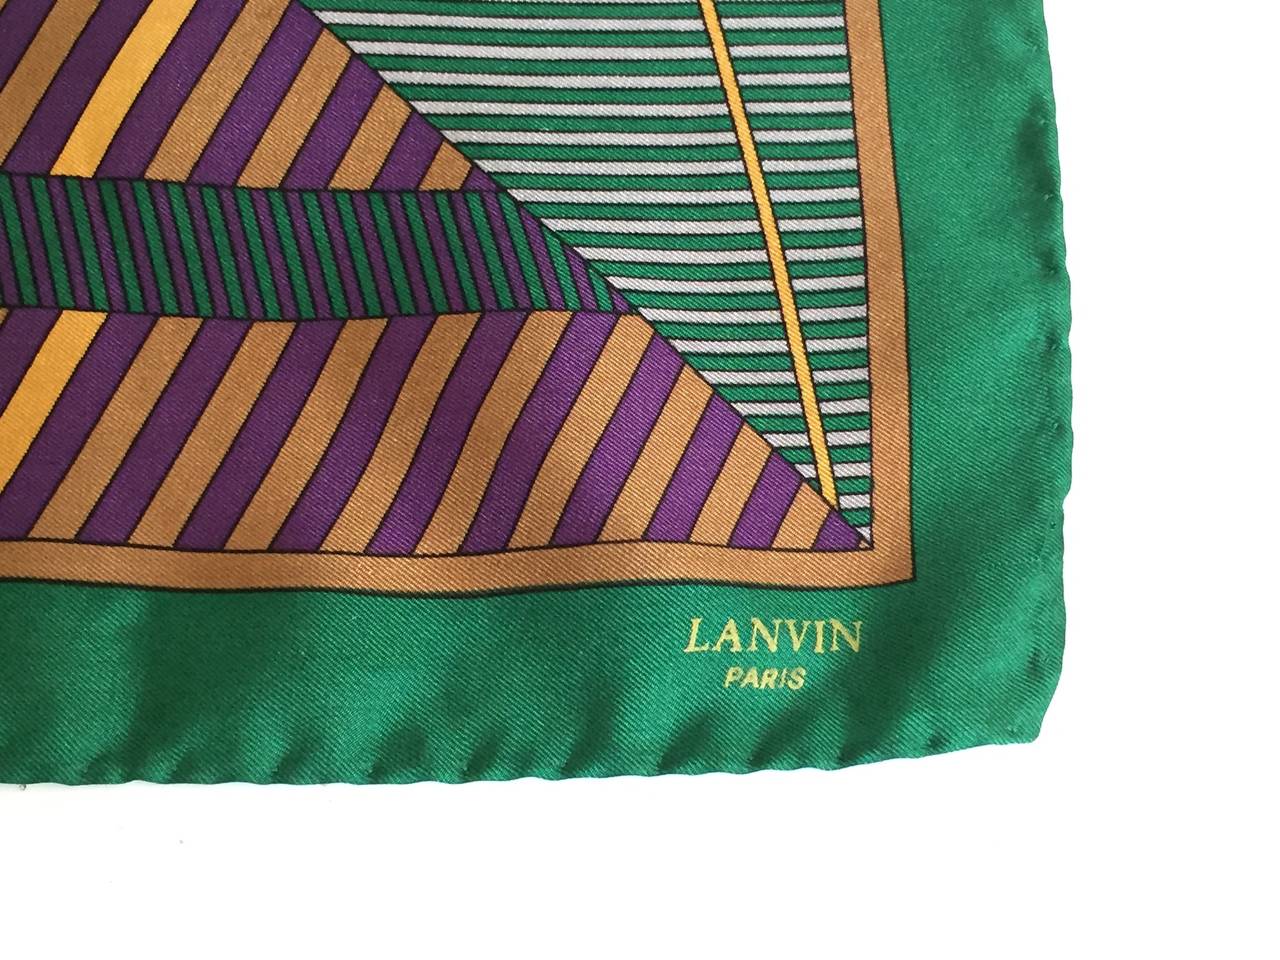 Lanvin 1980s silk pocket square.
19